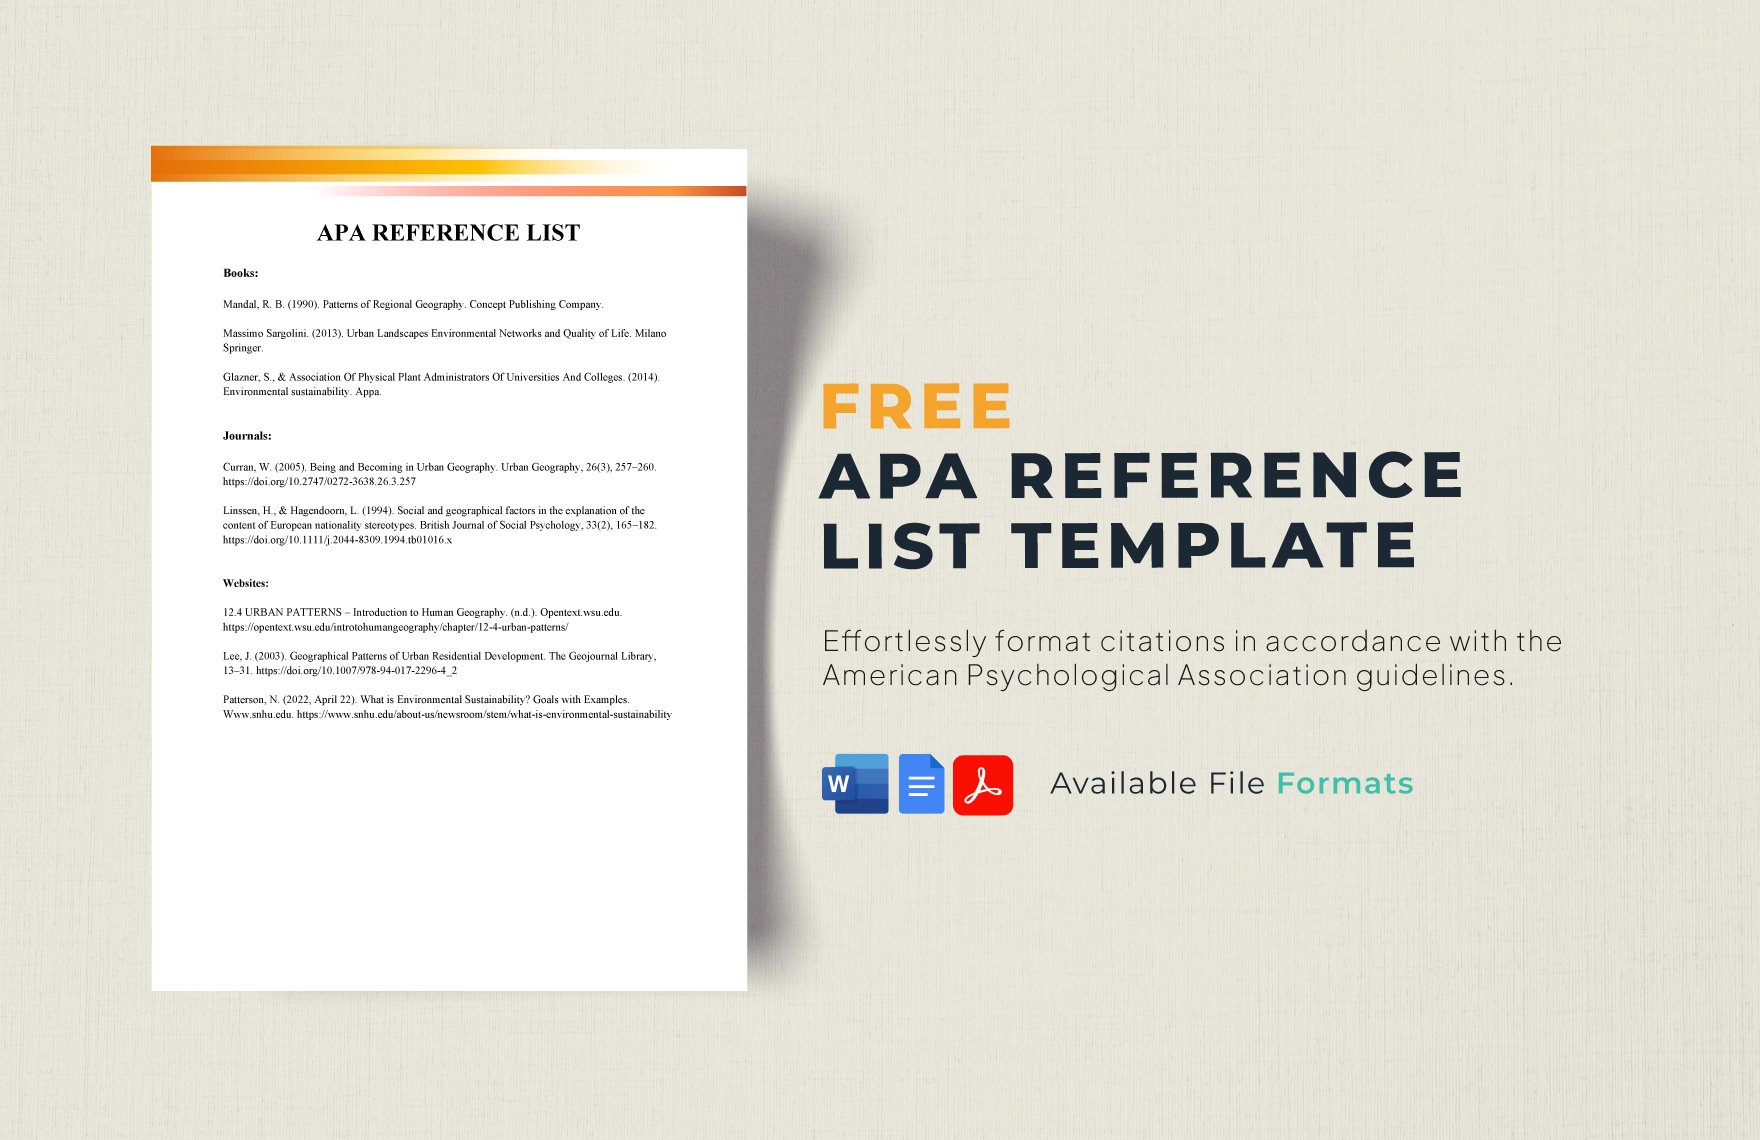 APA Reference List Template